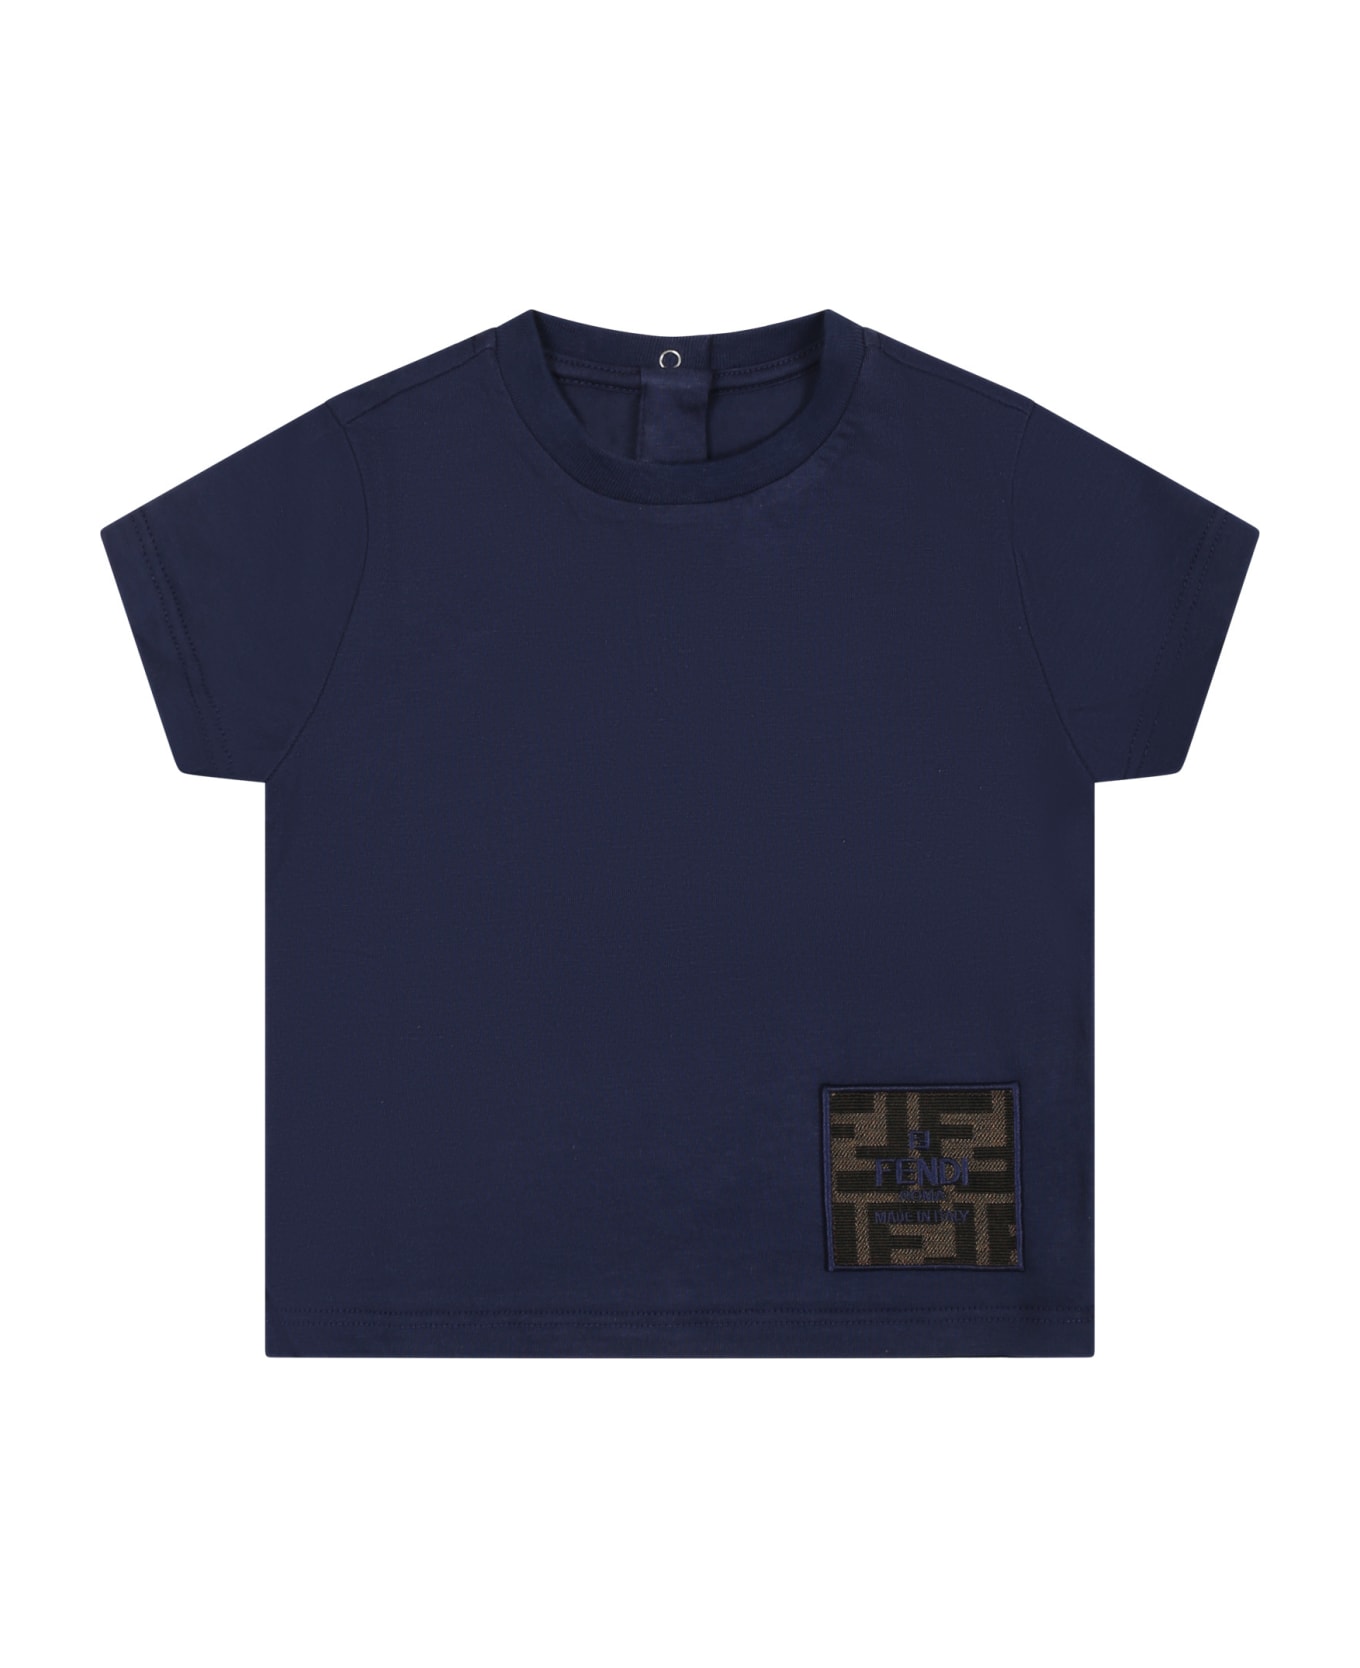 Fendi Blue T-shirt For Baby Boy With Ff - Blue